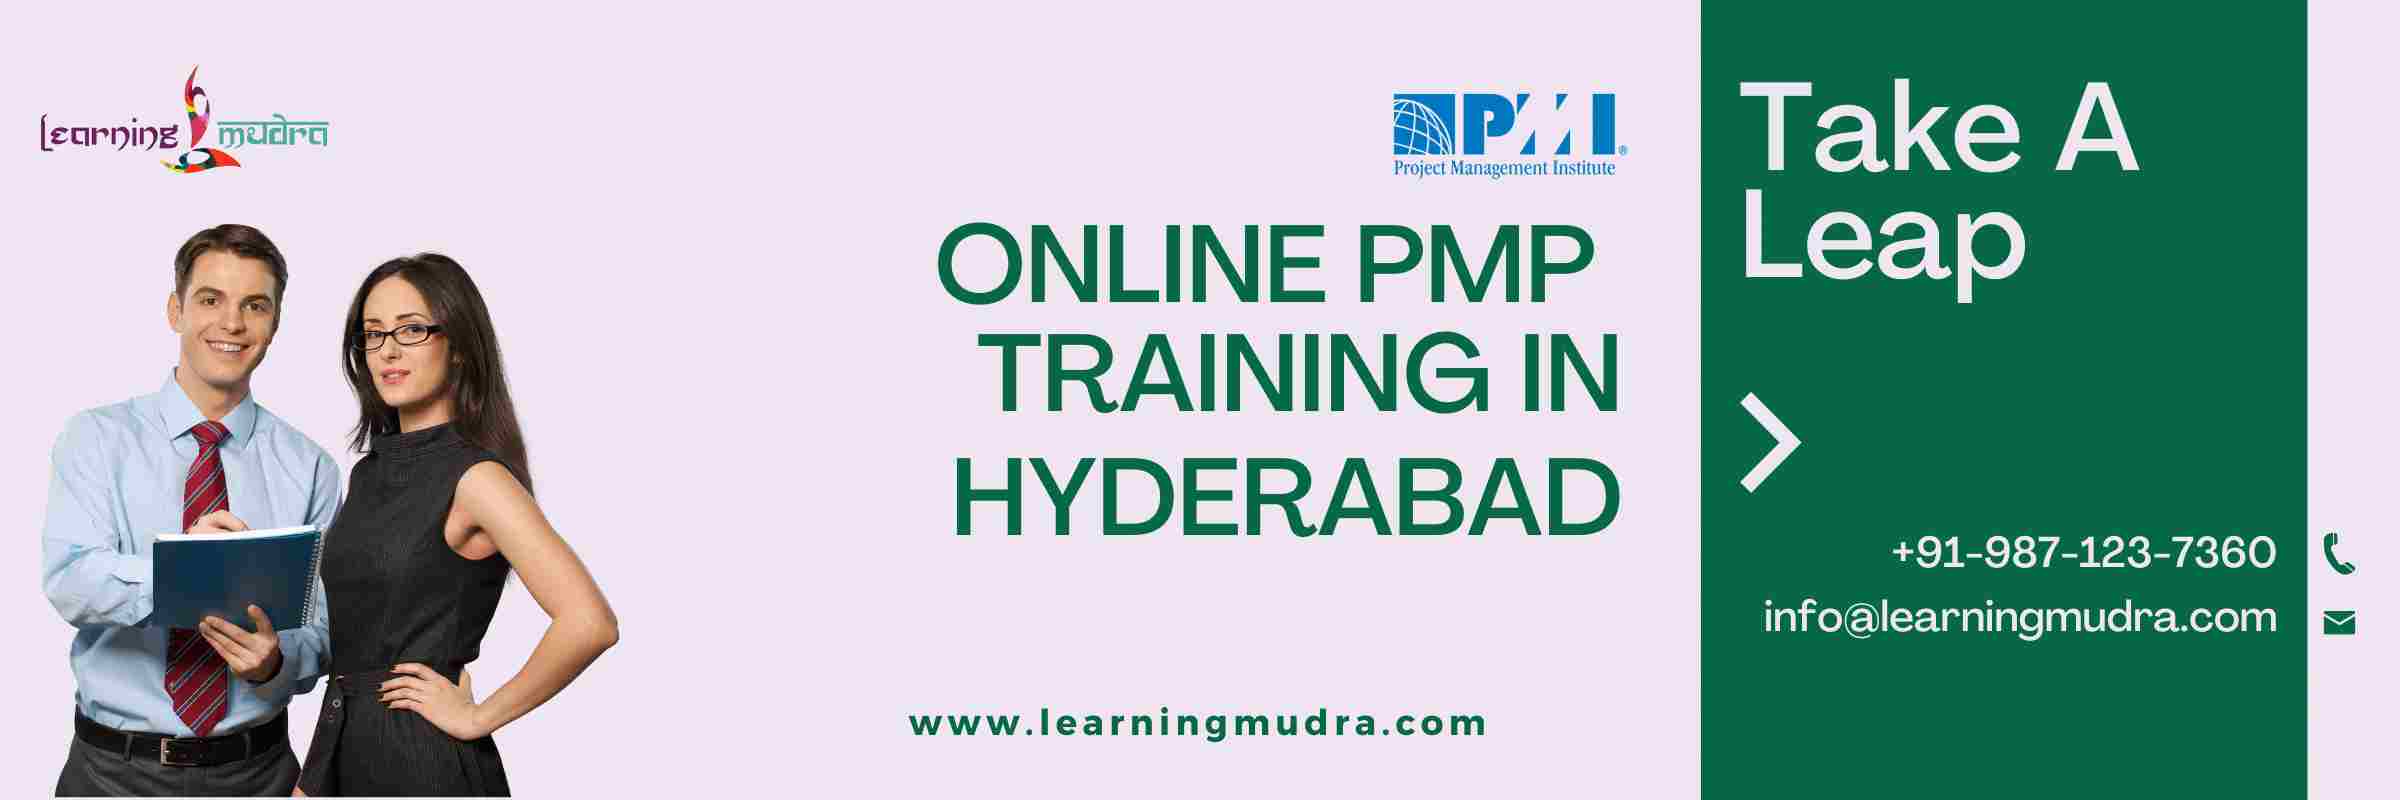 online pmp training in hyderabad